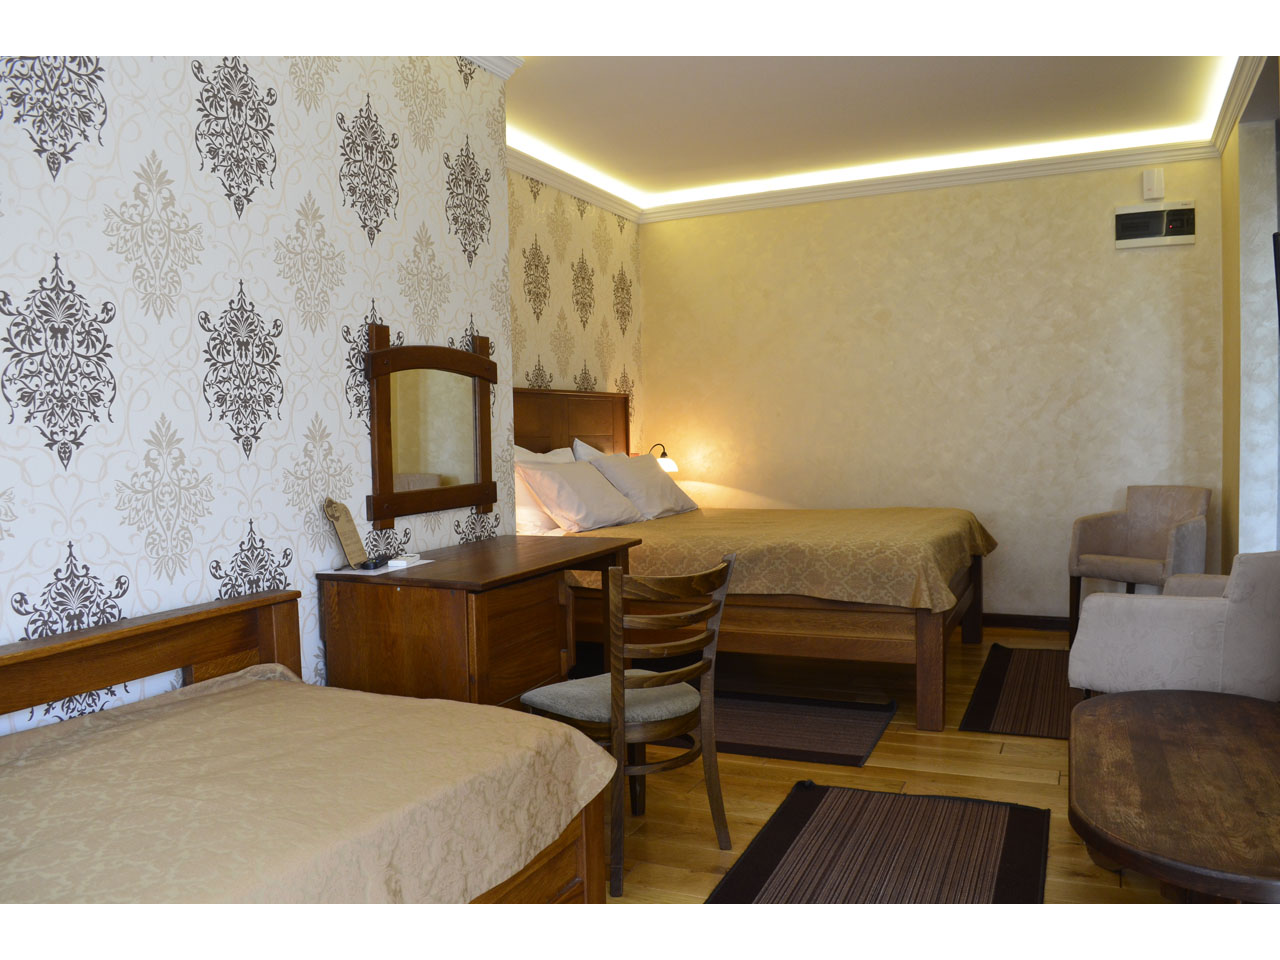 RESTAURANT JOVANJE Accommodation, room renting Belgrade - Photo 2